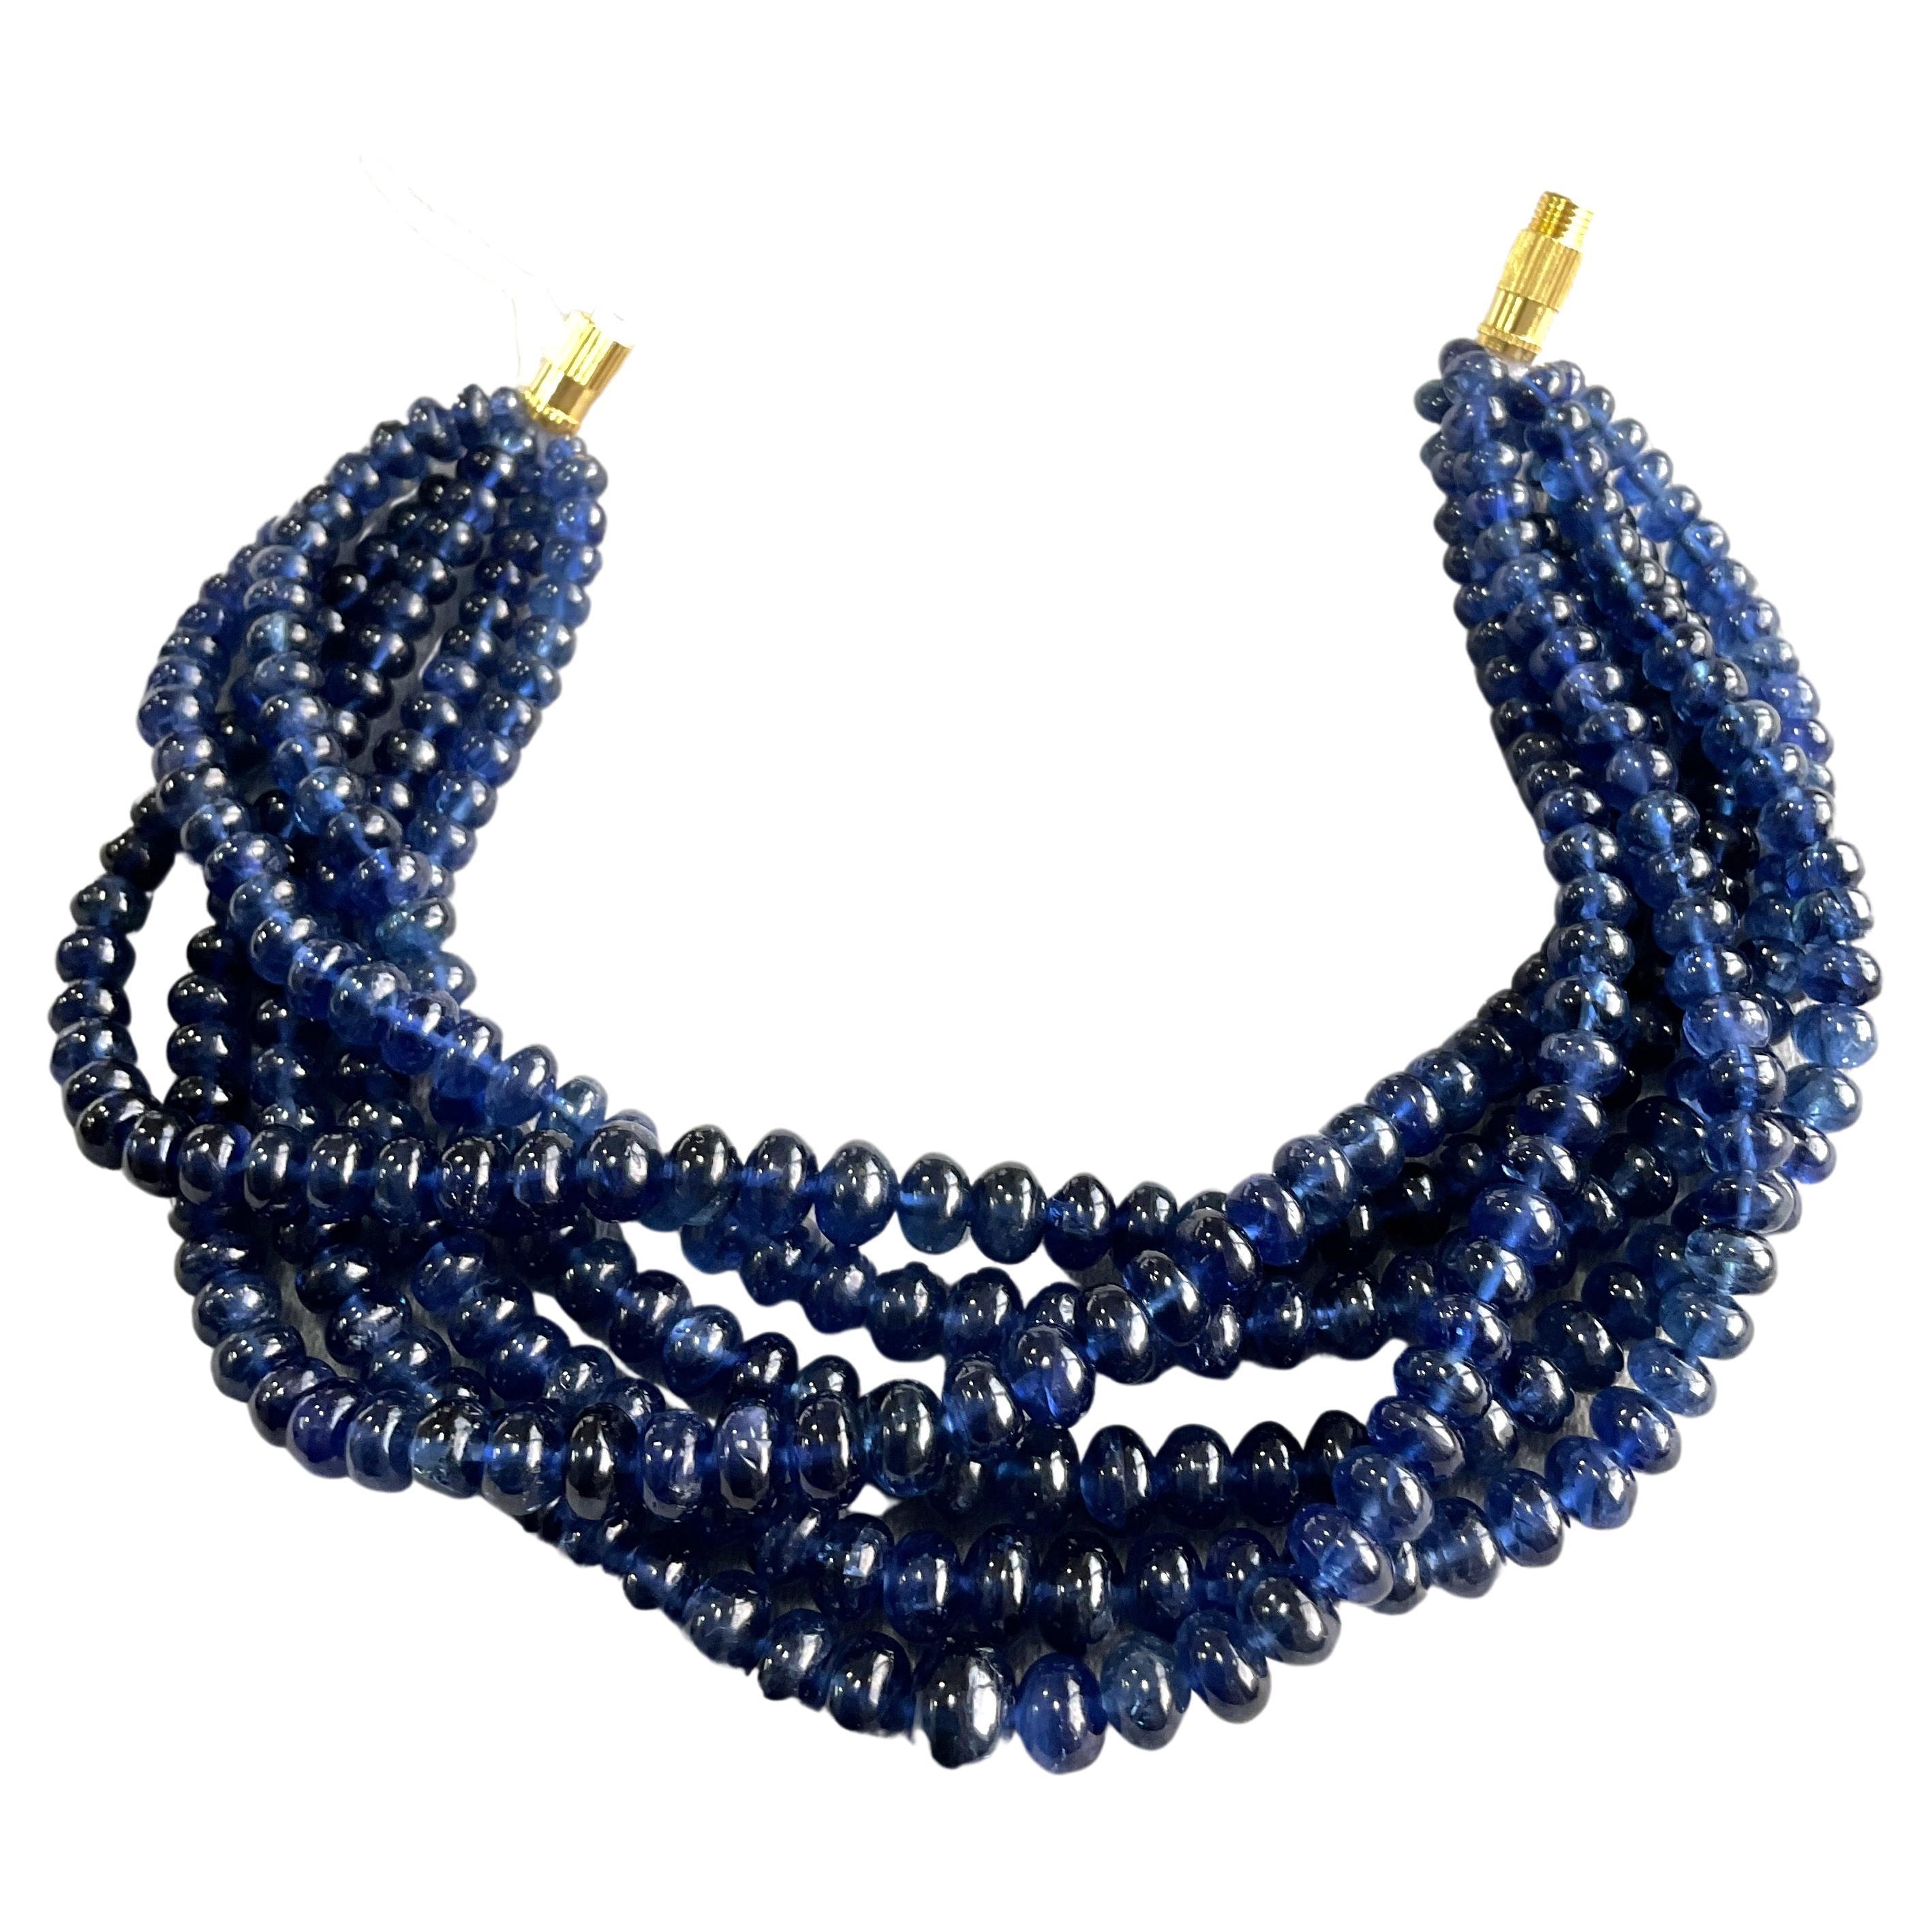 270.70 Carats Blue Sapphire Beaded gem Quality Necklace no heat burmese sapphire